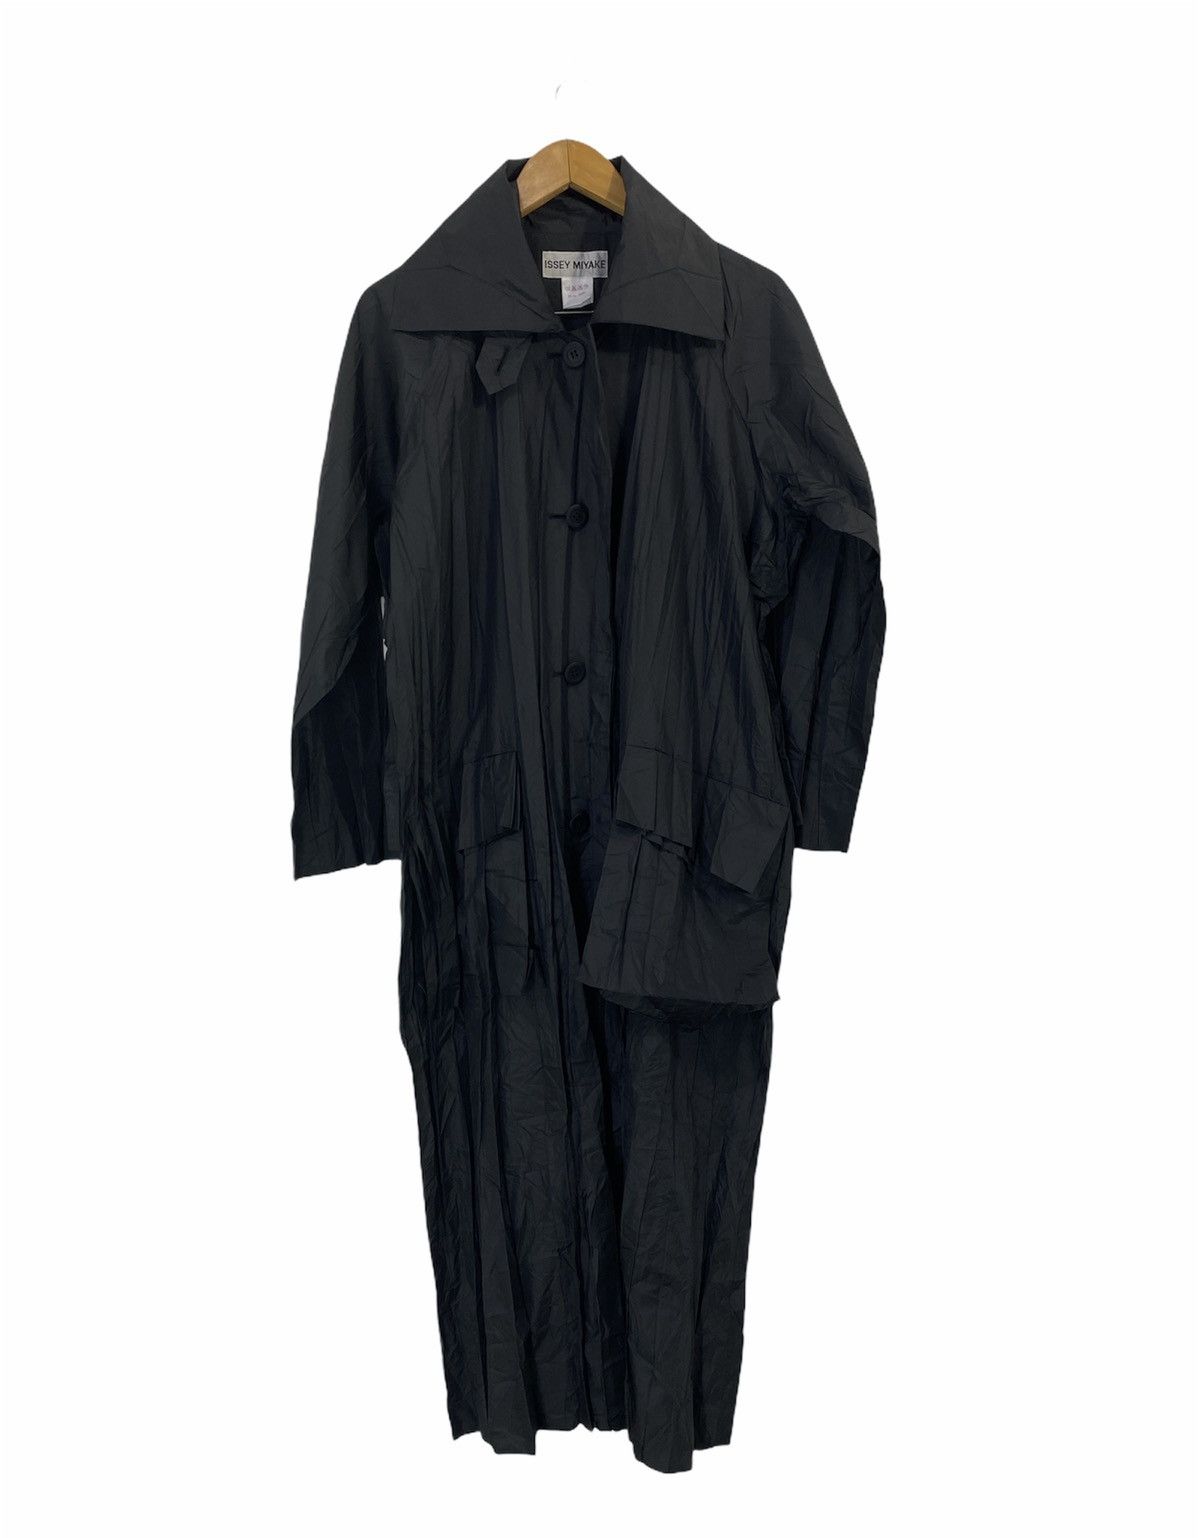 Rare Issey Miyake Wrinkle Pleated Long Jacket Design Rare - 1